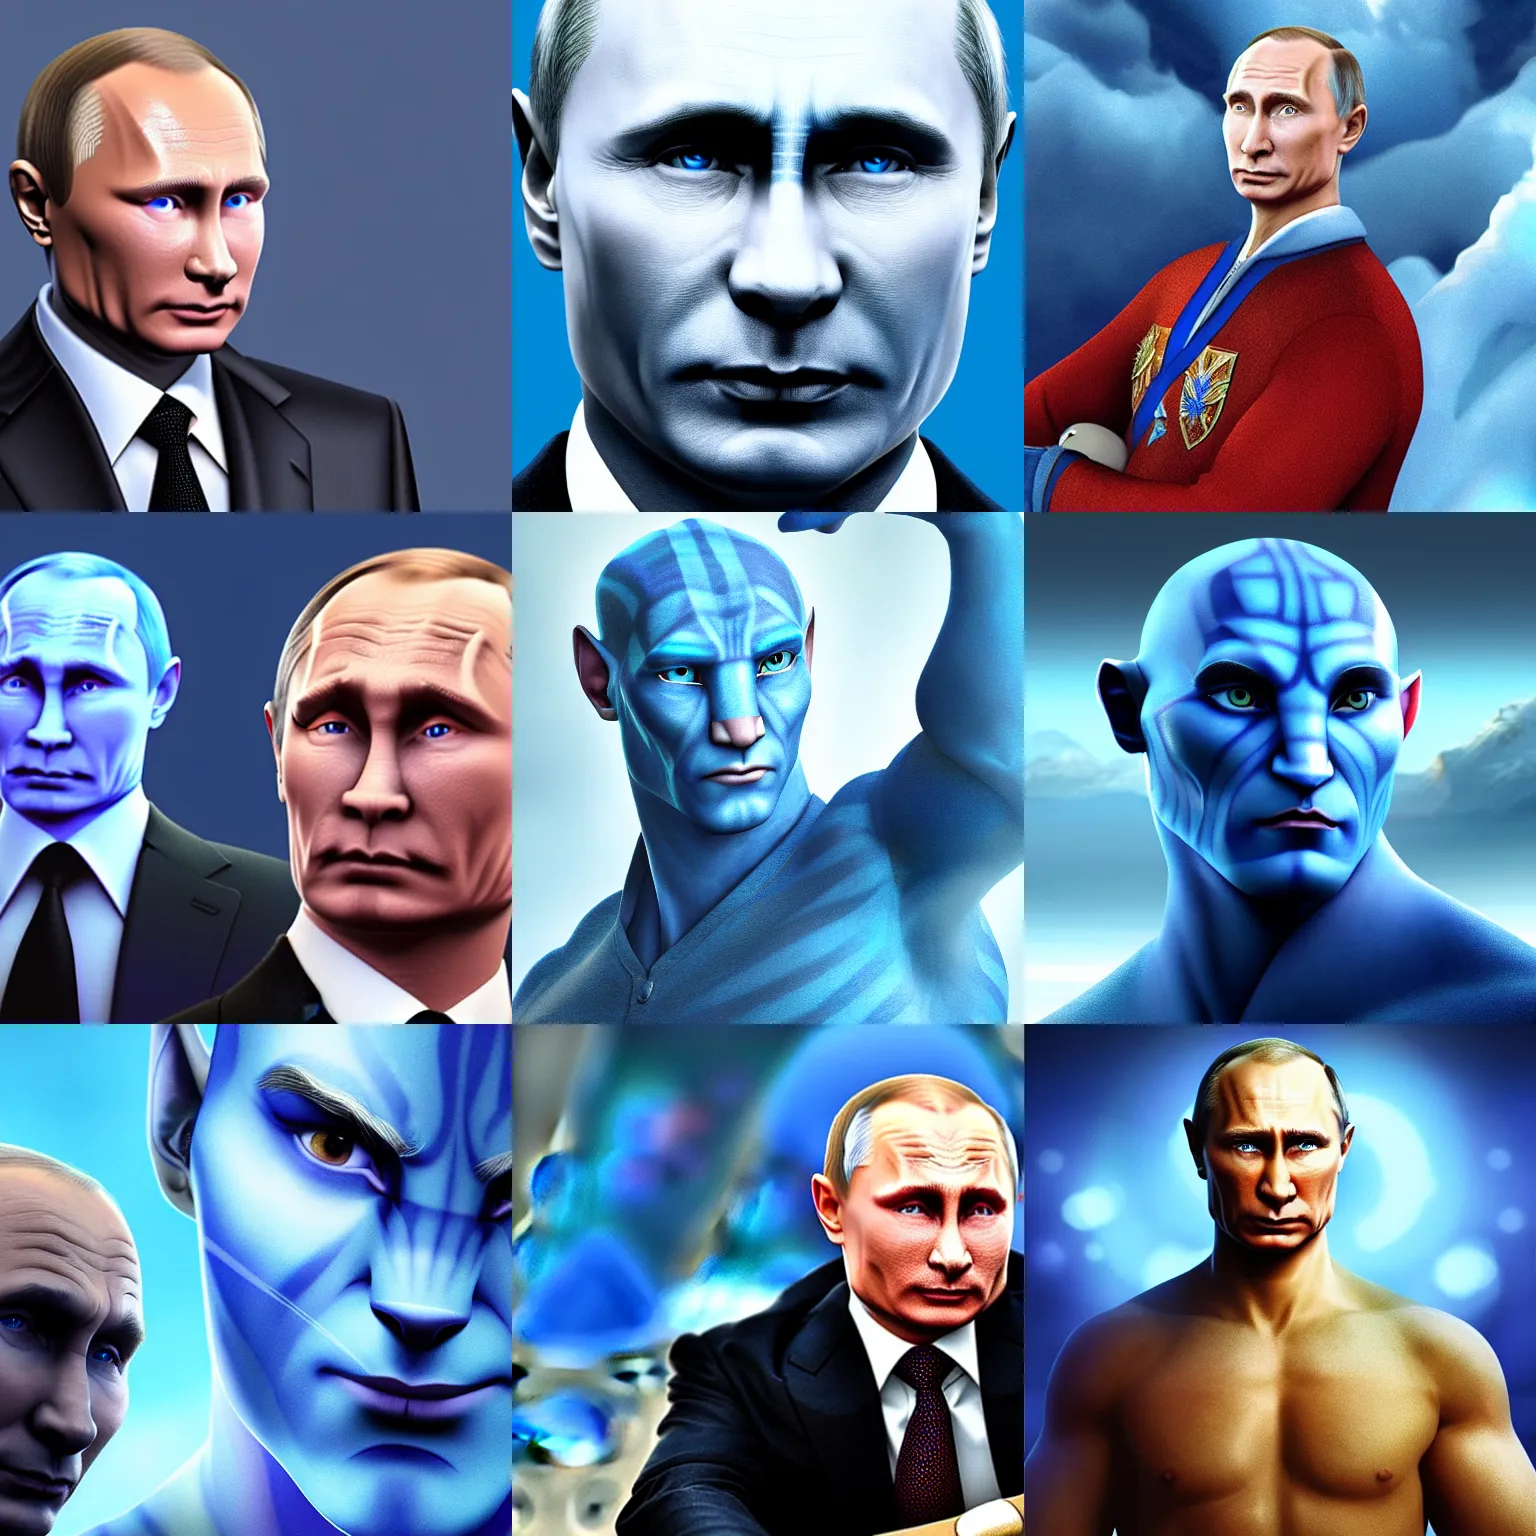 Prompt: Vladimir Putin as avatar 4K quality super realistic avatar